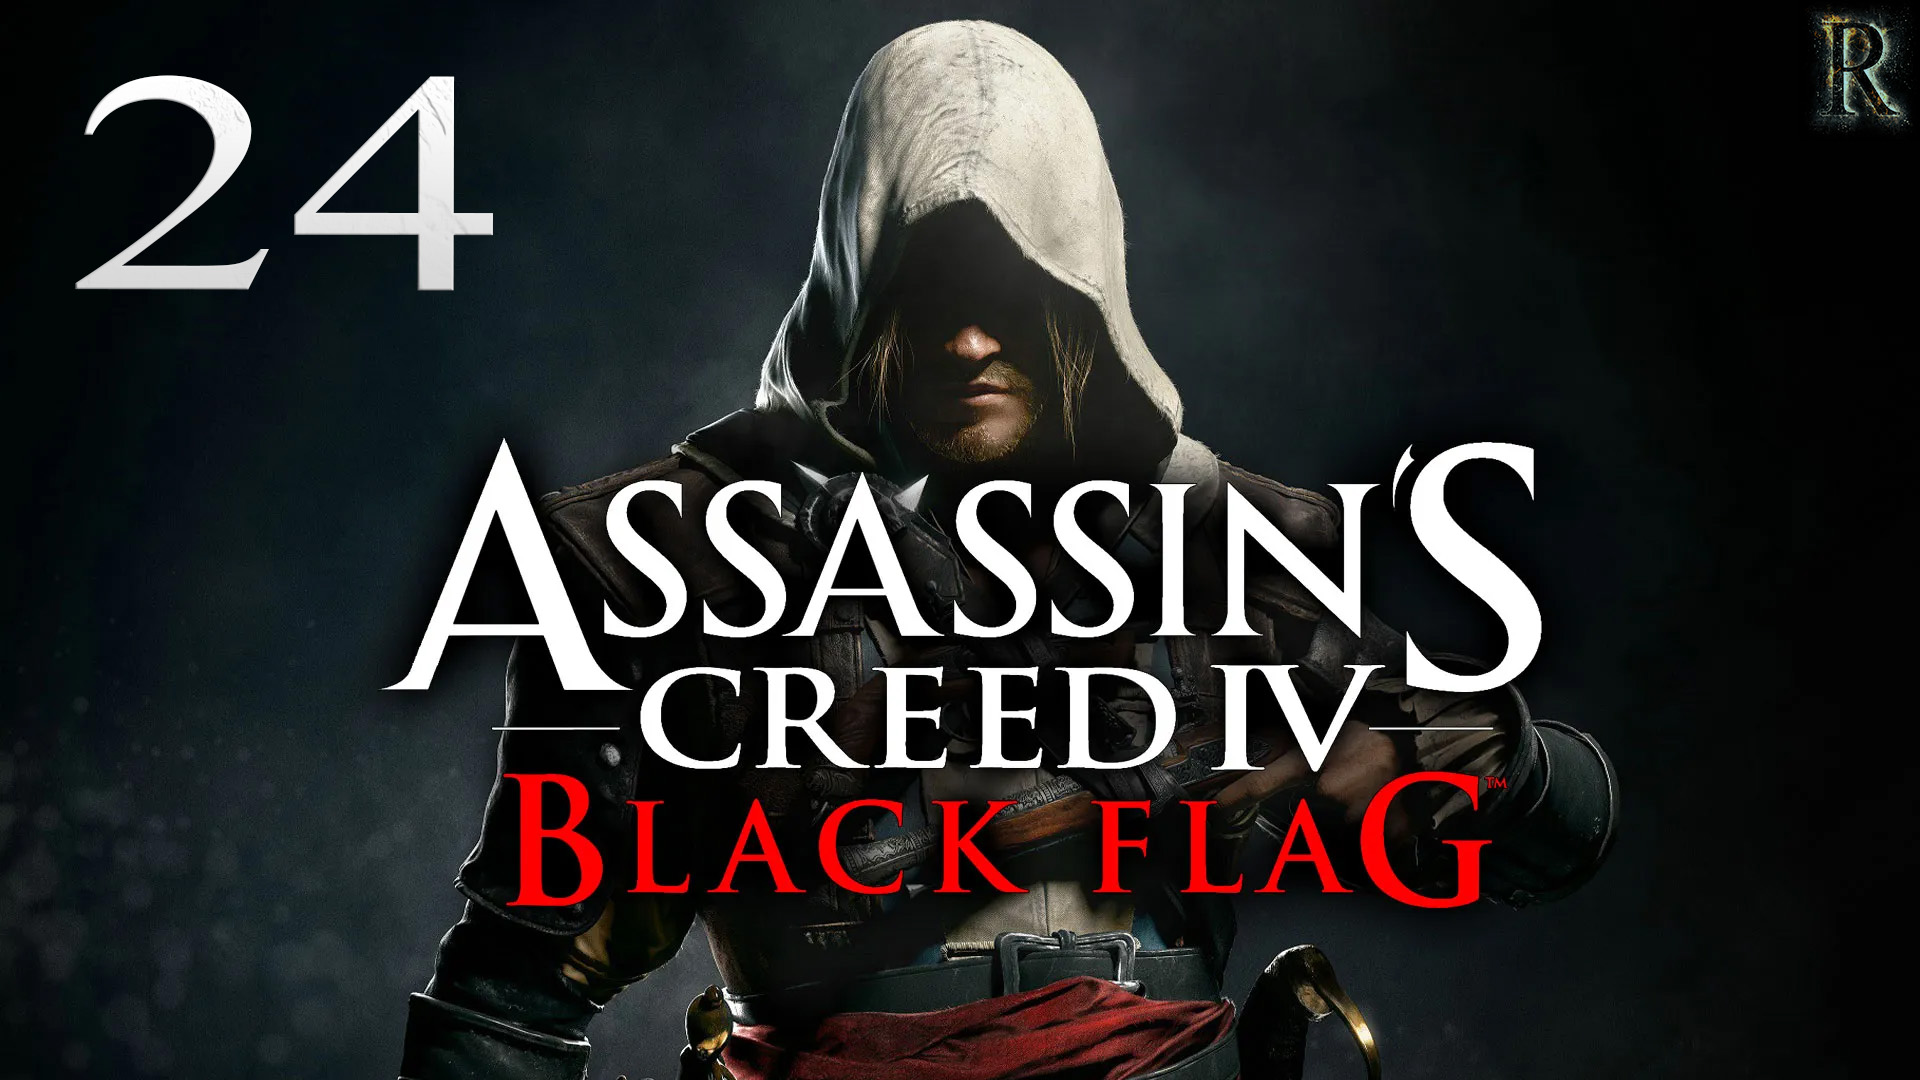 Assassin's Creed IV Black Flag -  24 серия. (Плохая кровь / Вечная заноза)